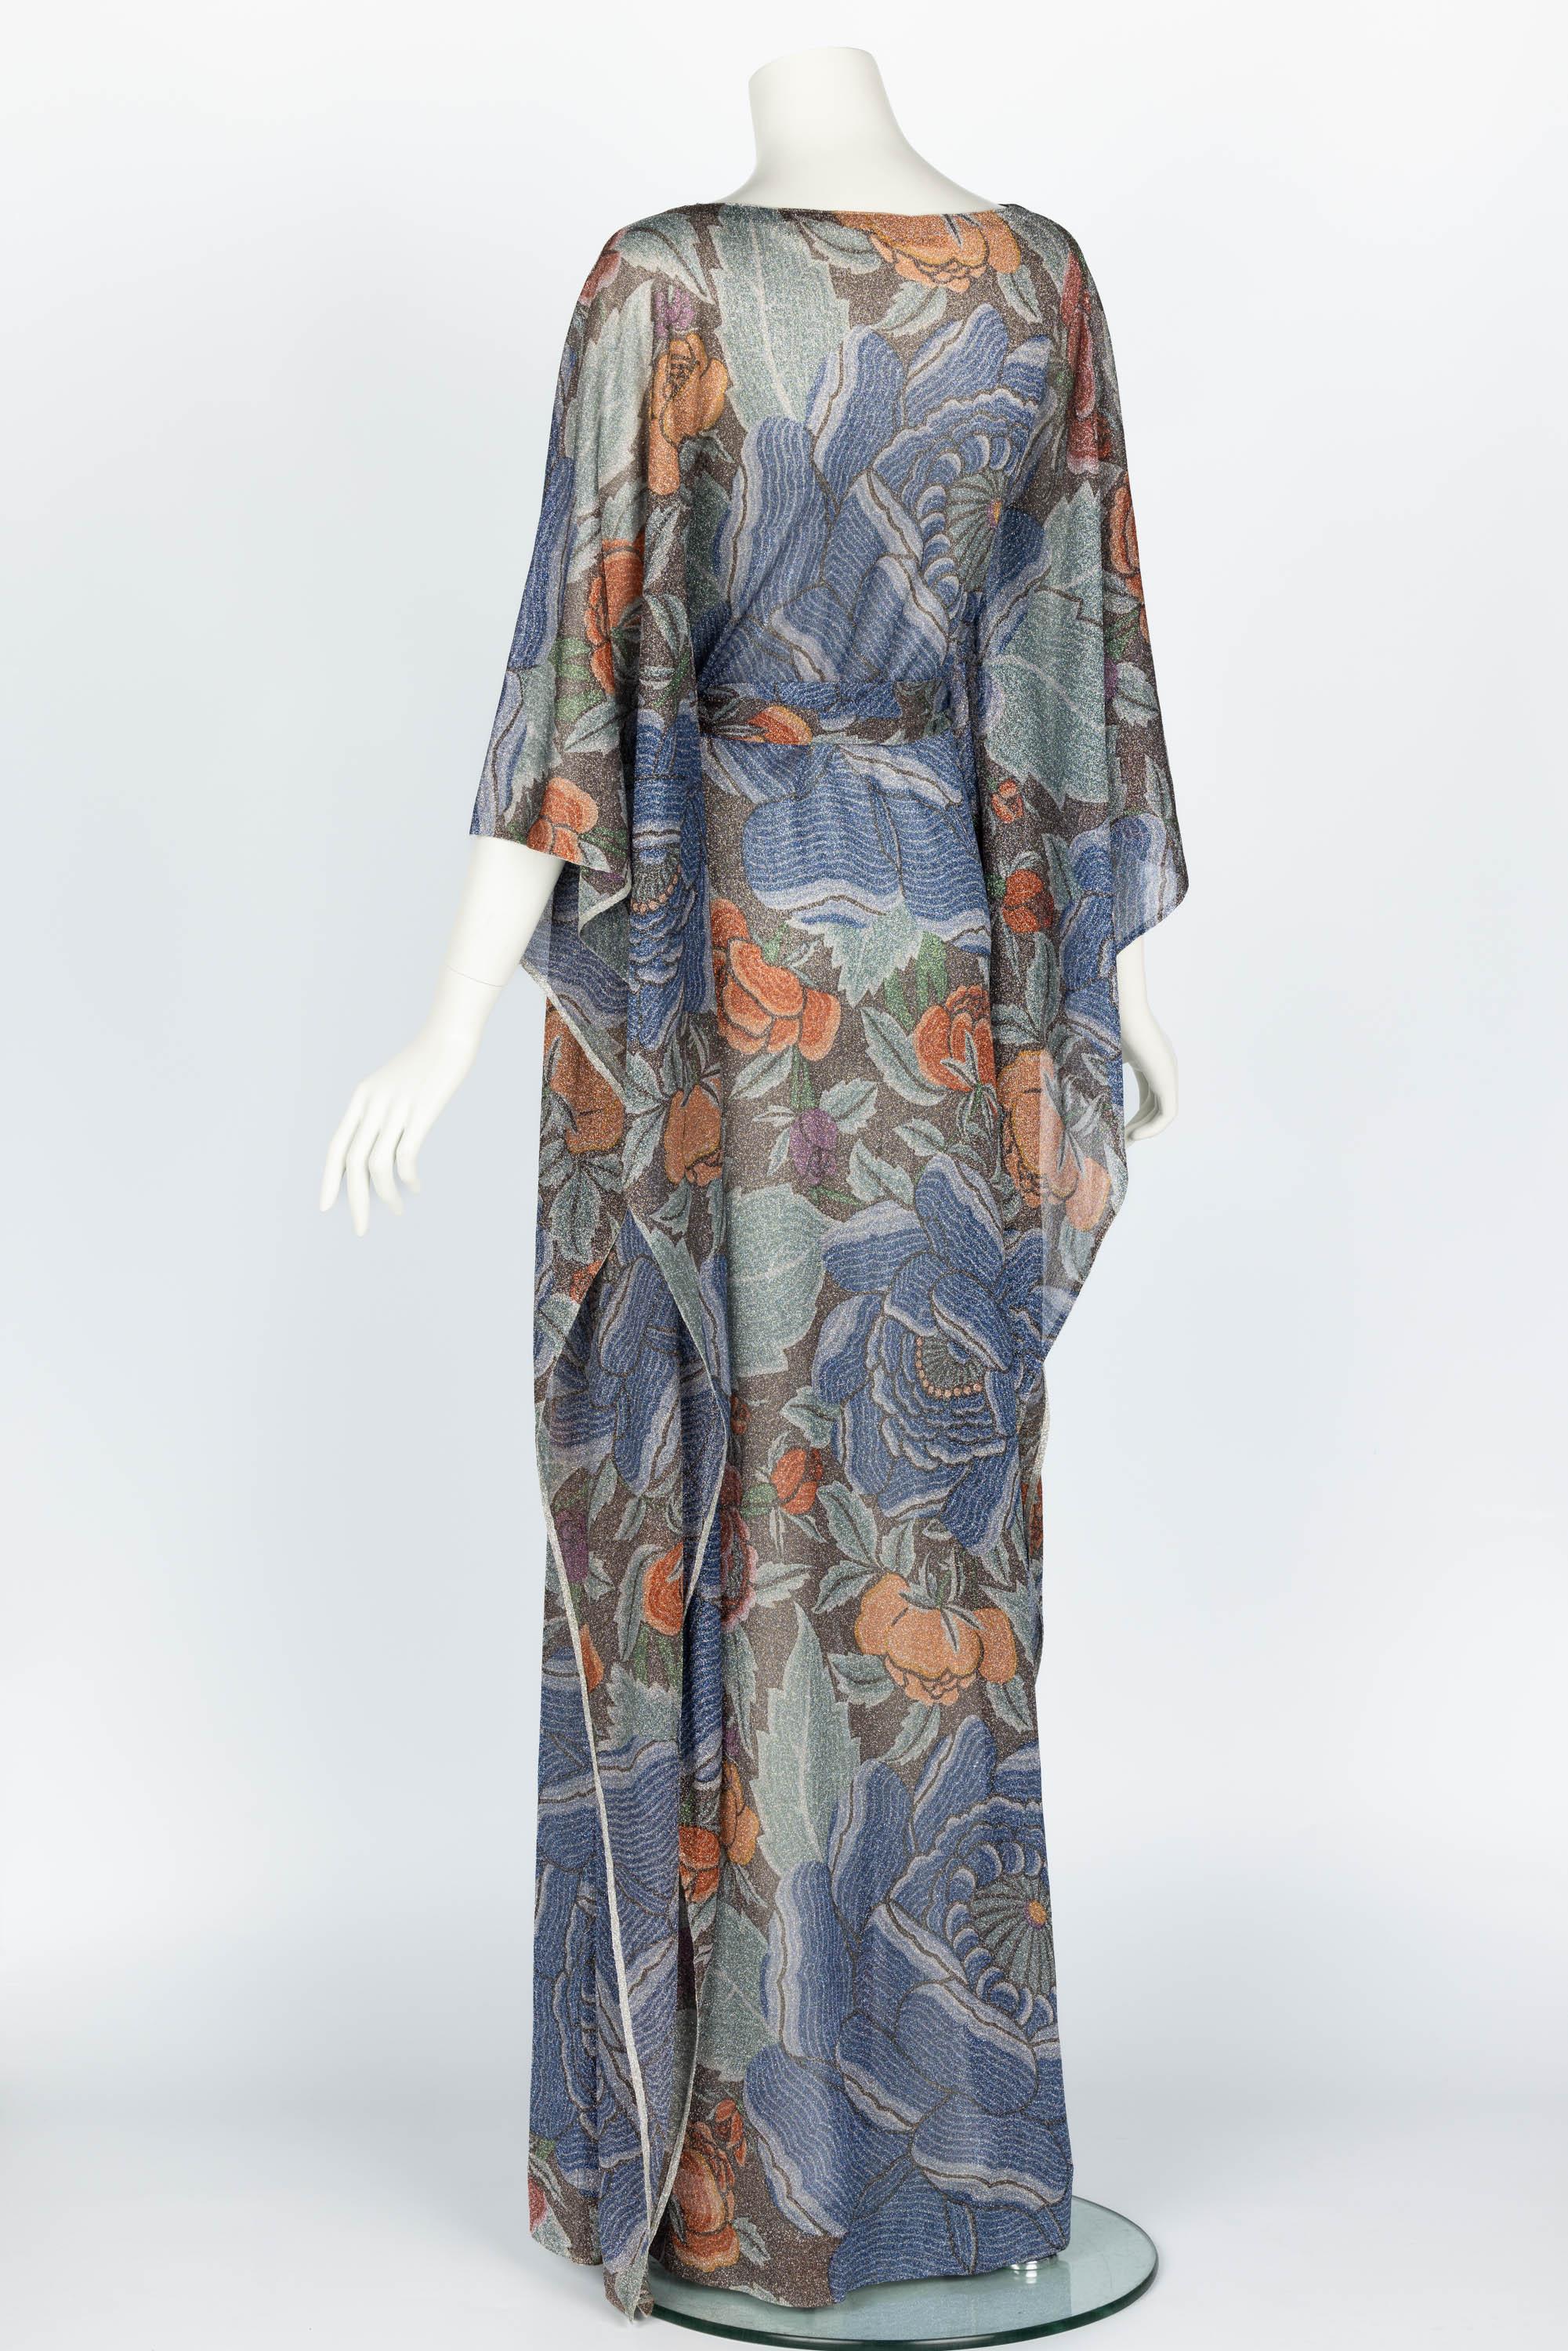 Iconic Missoni 1970s Floral Print Metallic Lurex Caftan Dress  For Sale 1